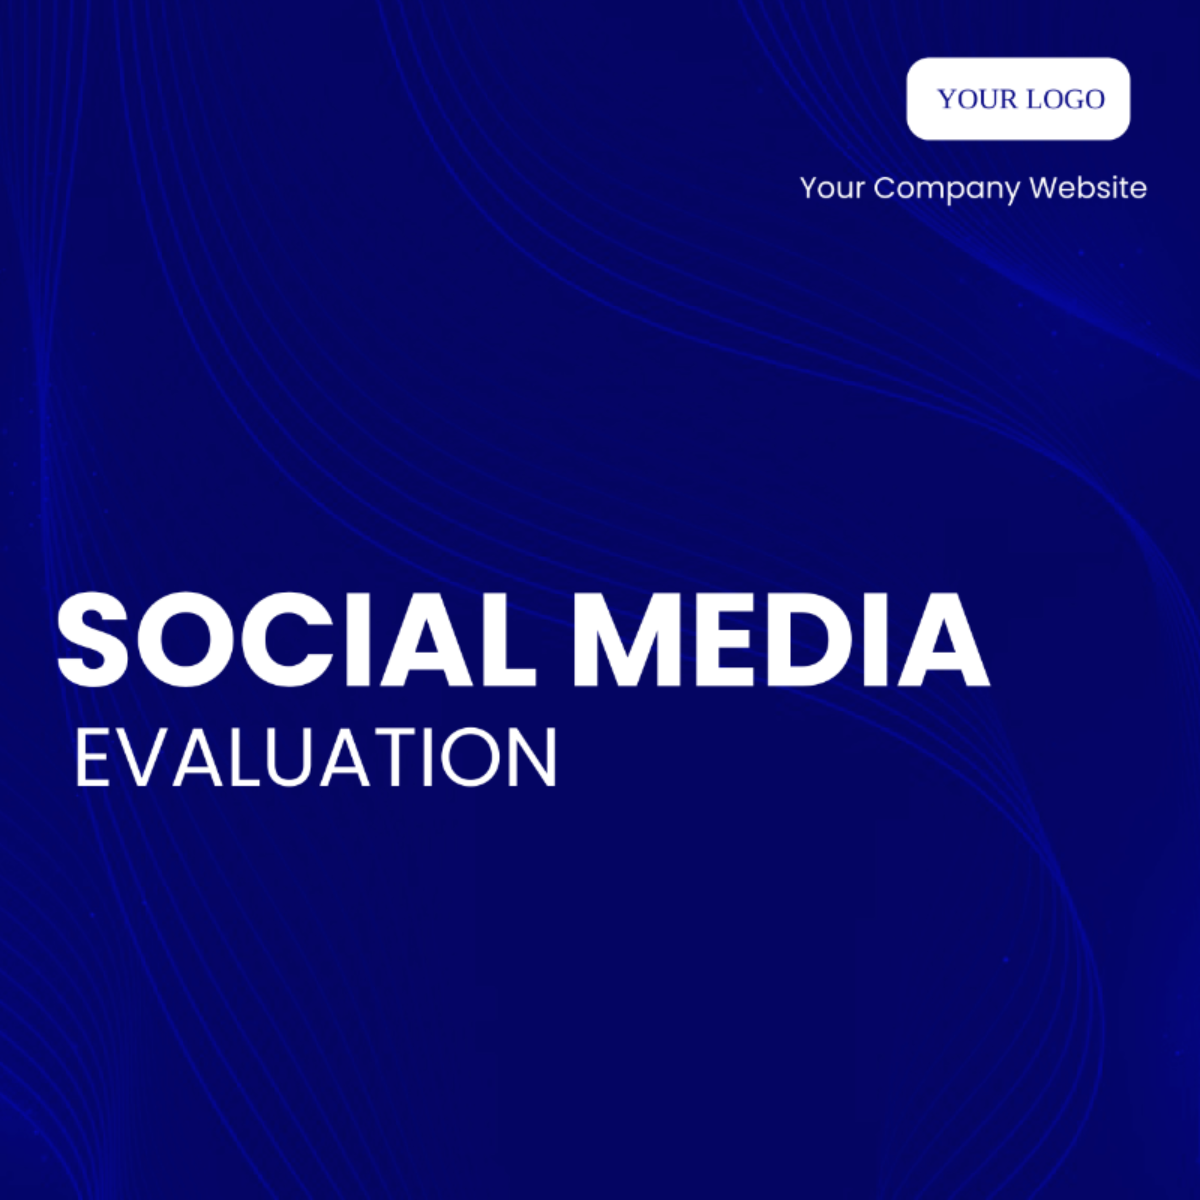 Social Media Evaluation Template